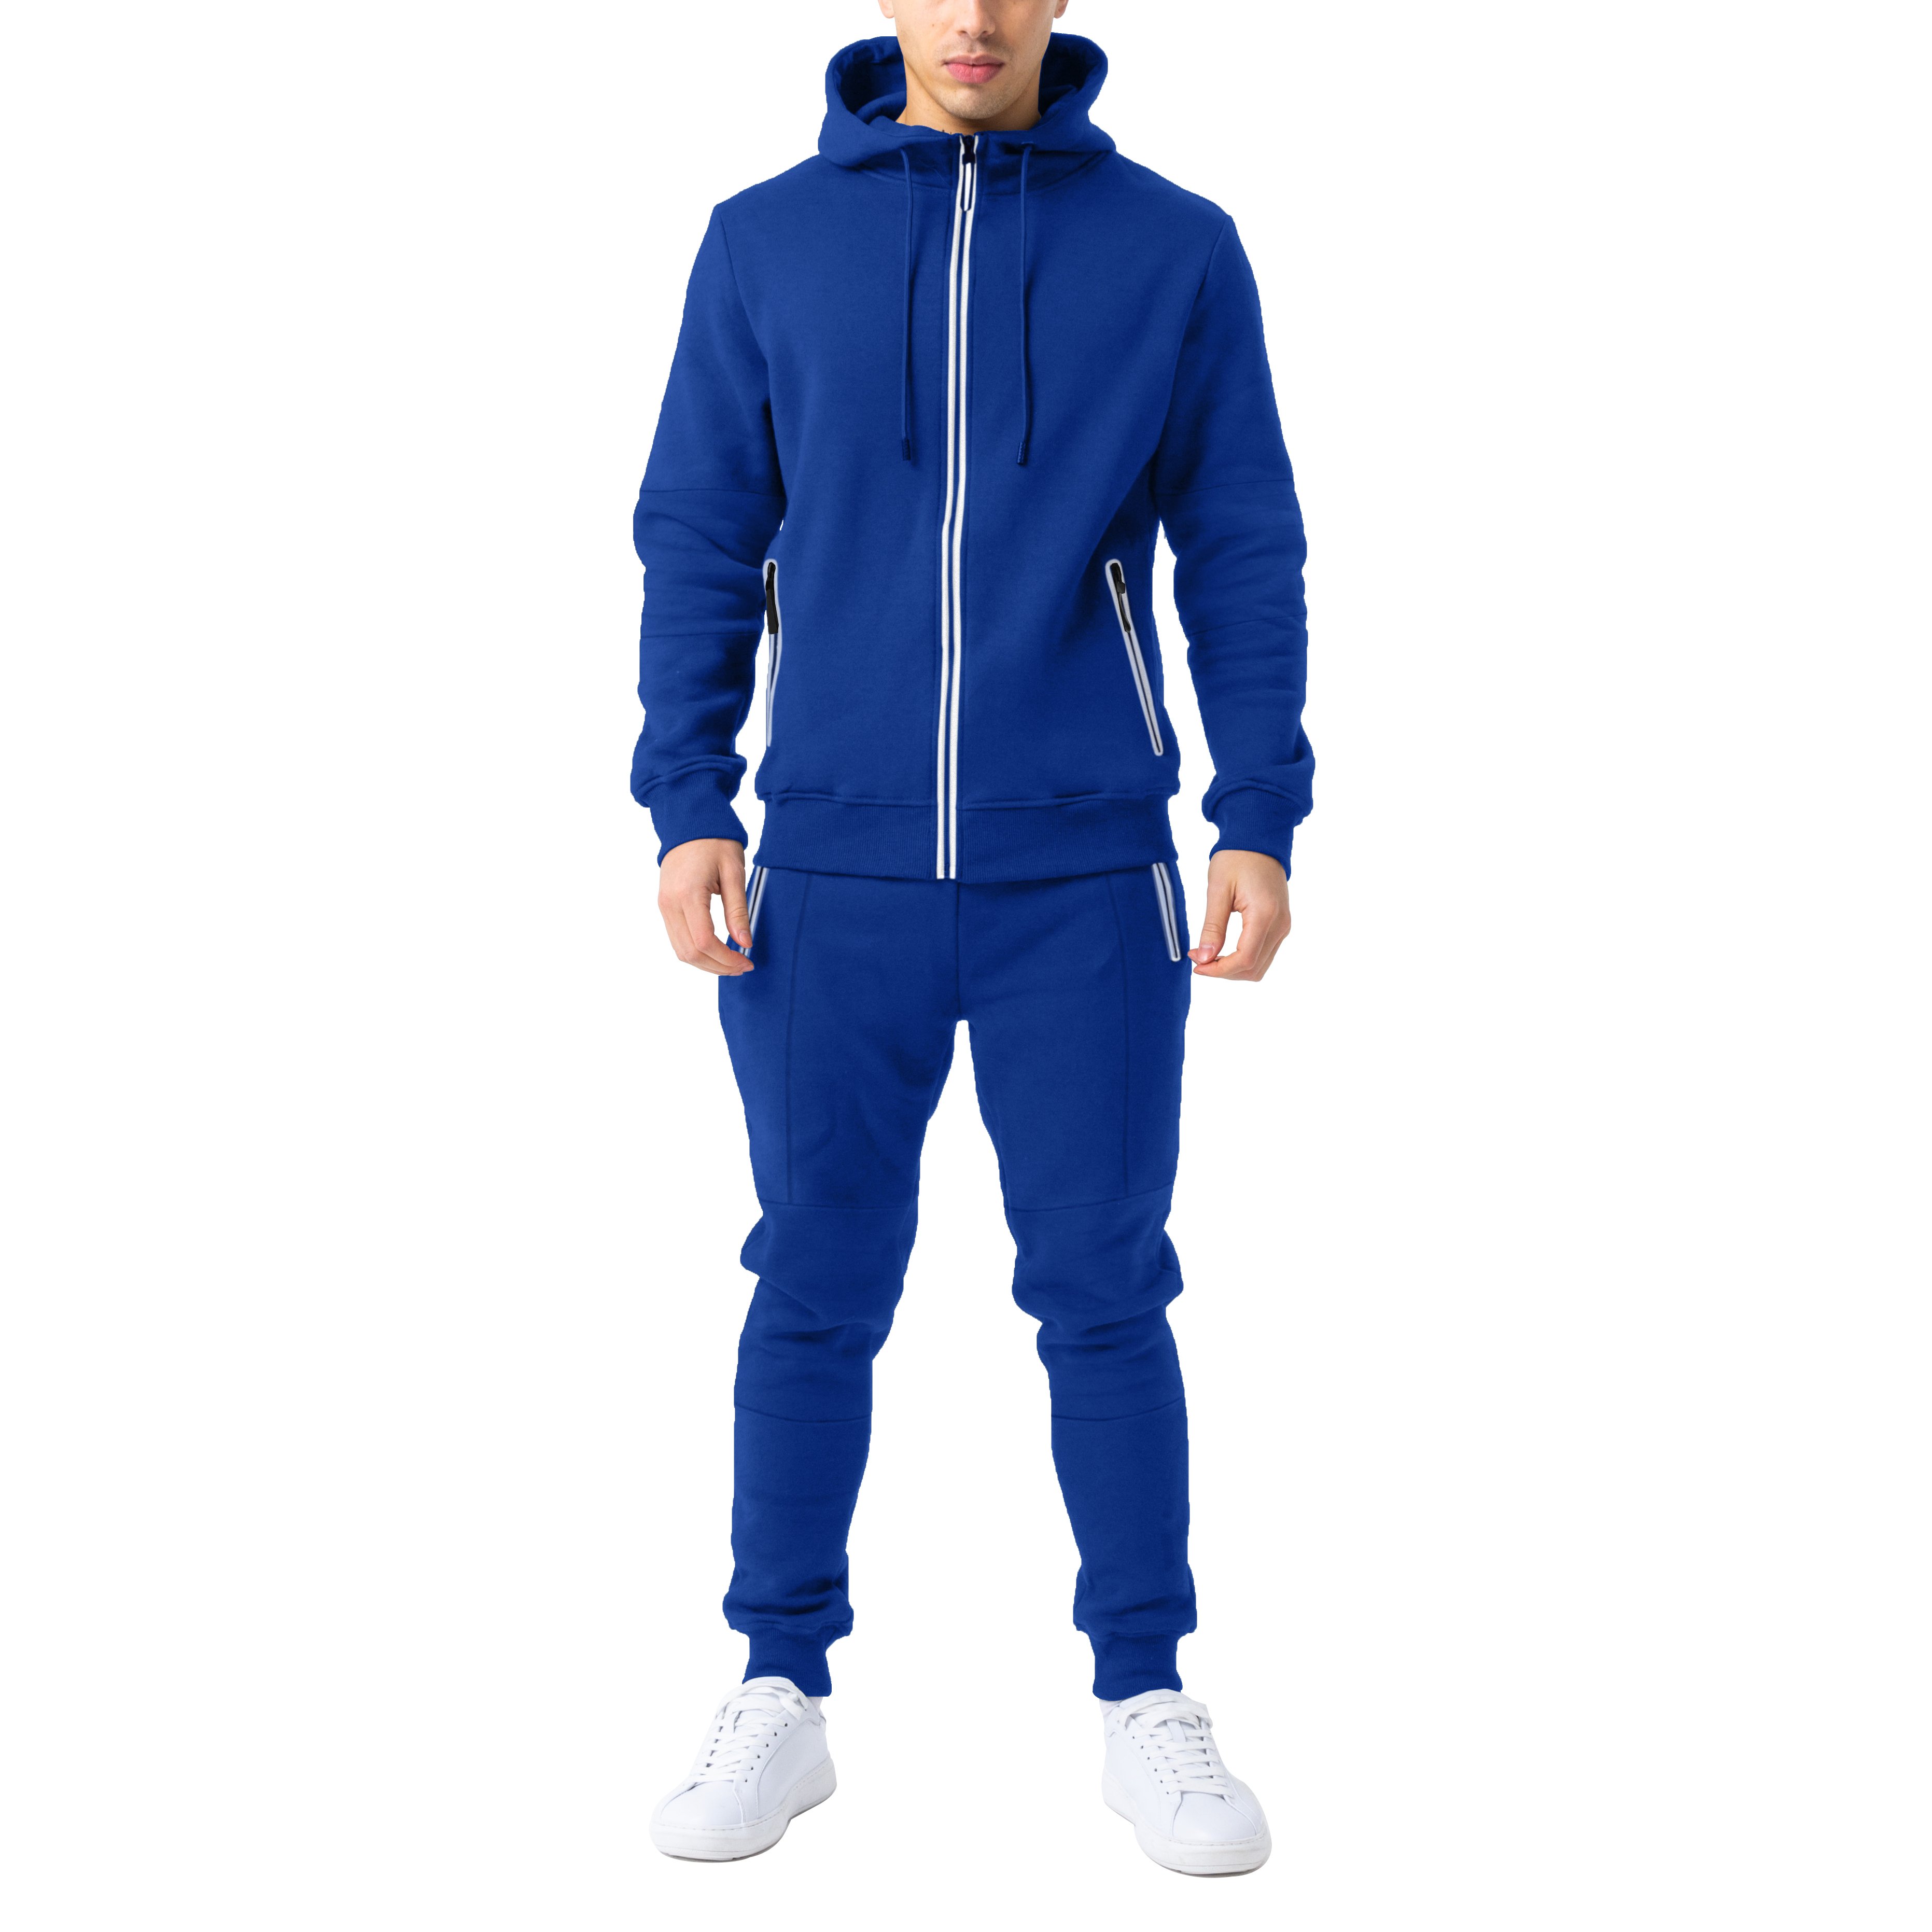 Men's Stylish Slim Fitting Hoodie & Jogger Set - Blue, X-Large